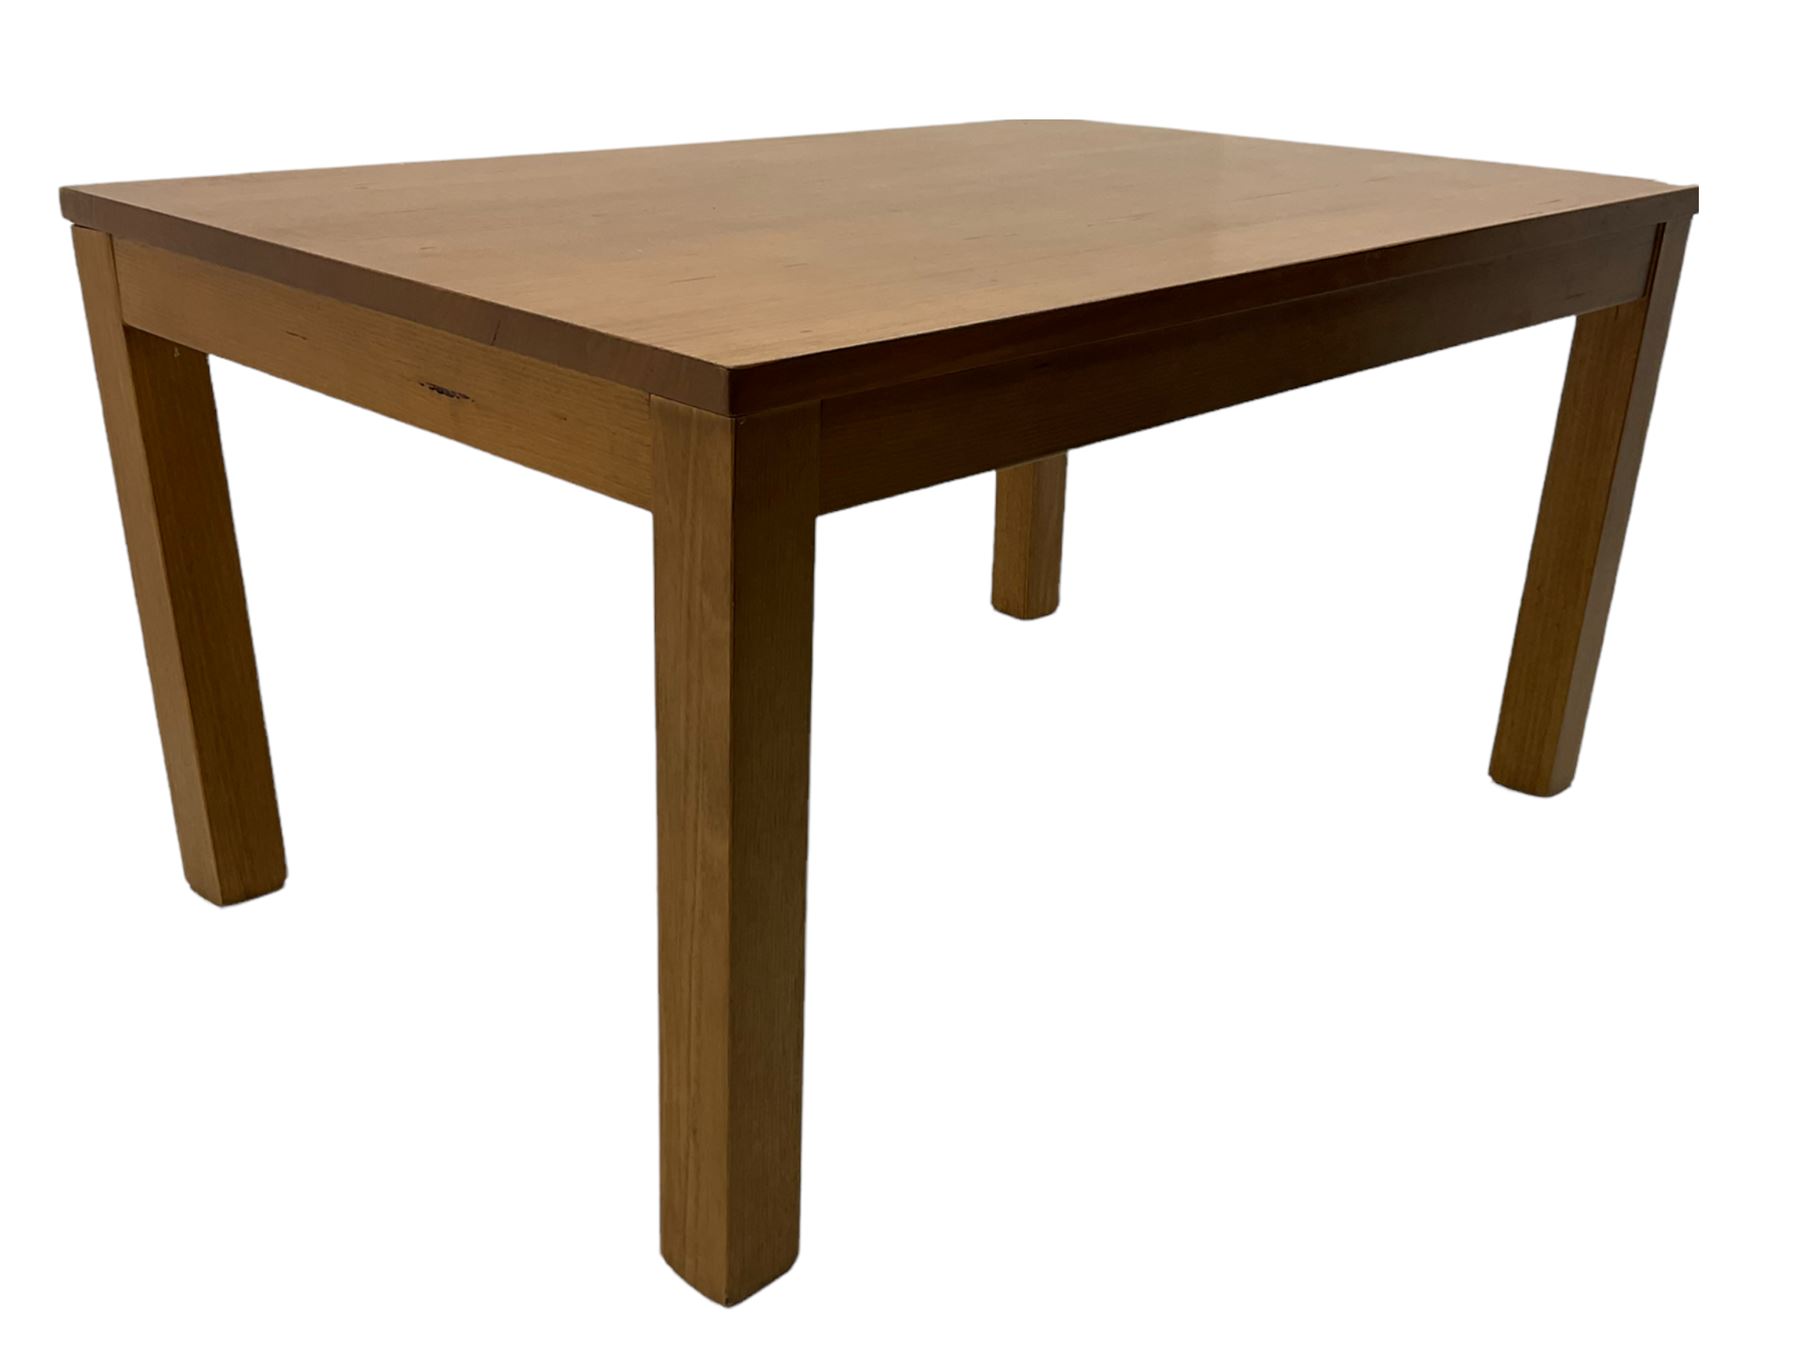 Light oak rectangular dining table - Image 3 of 5